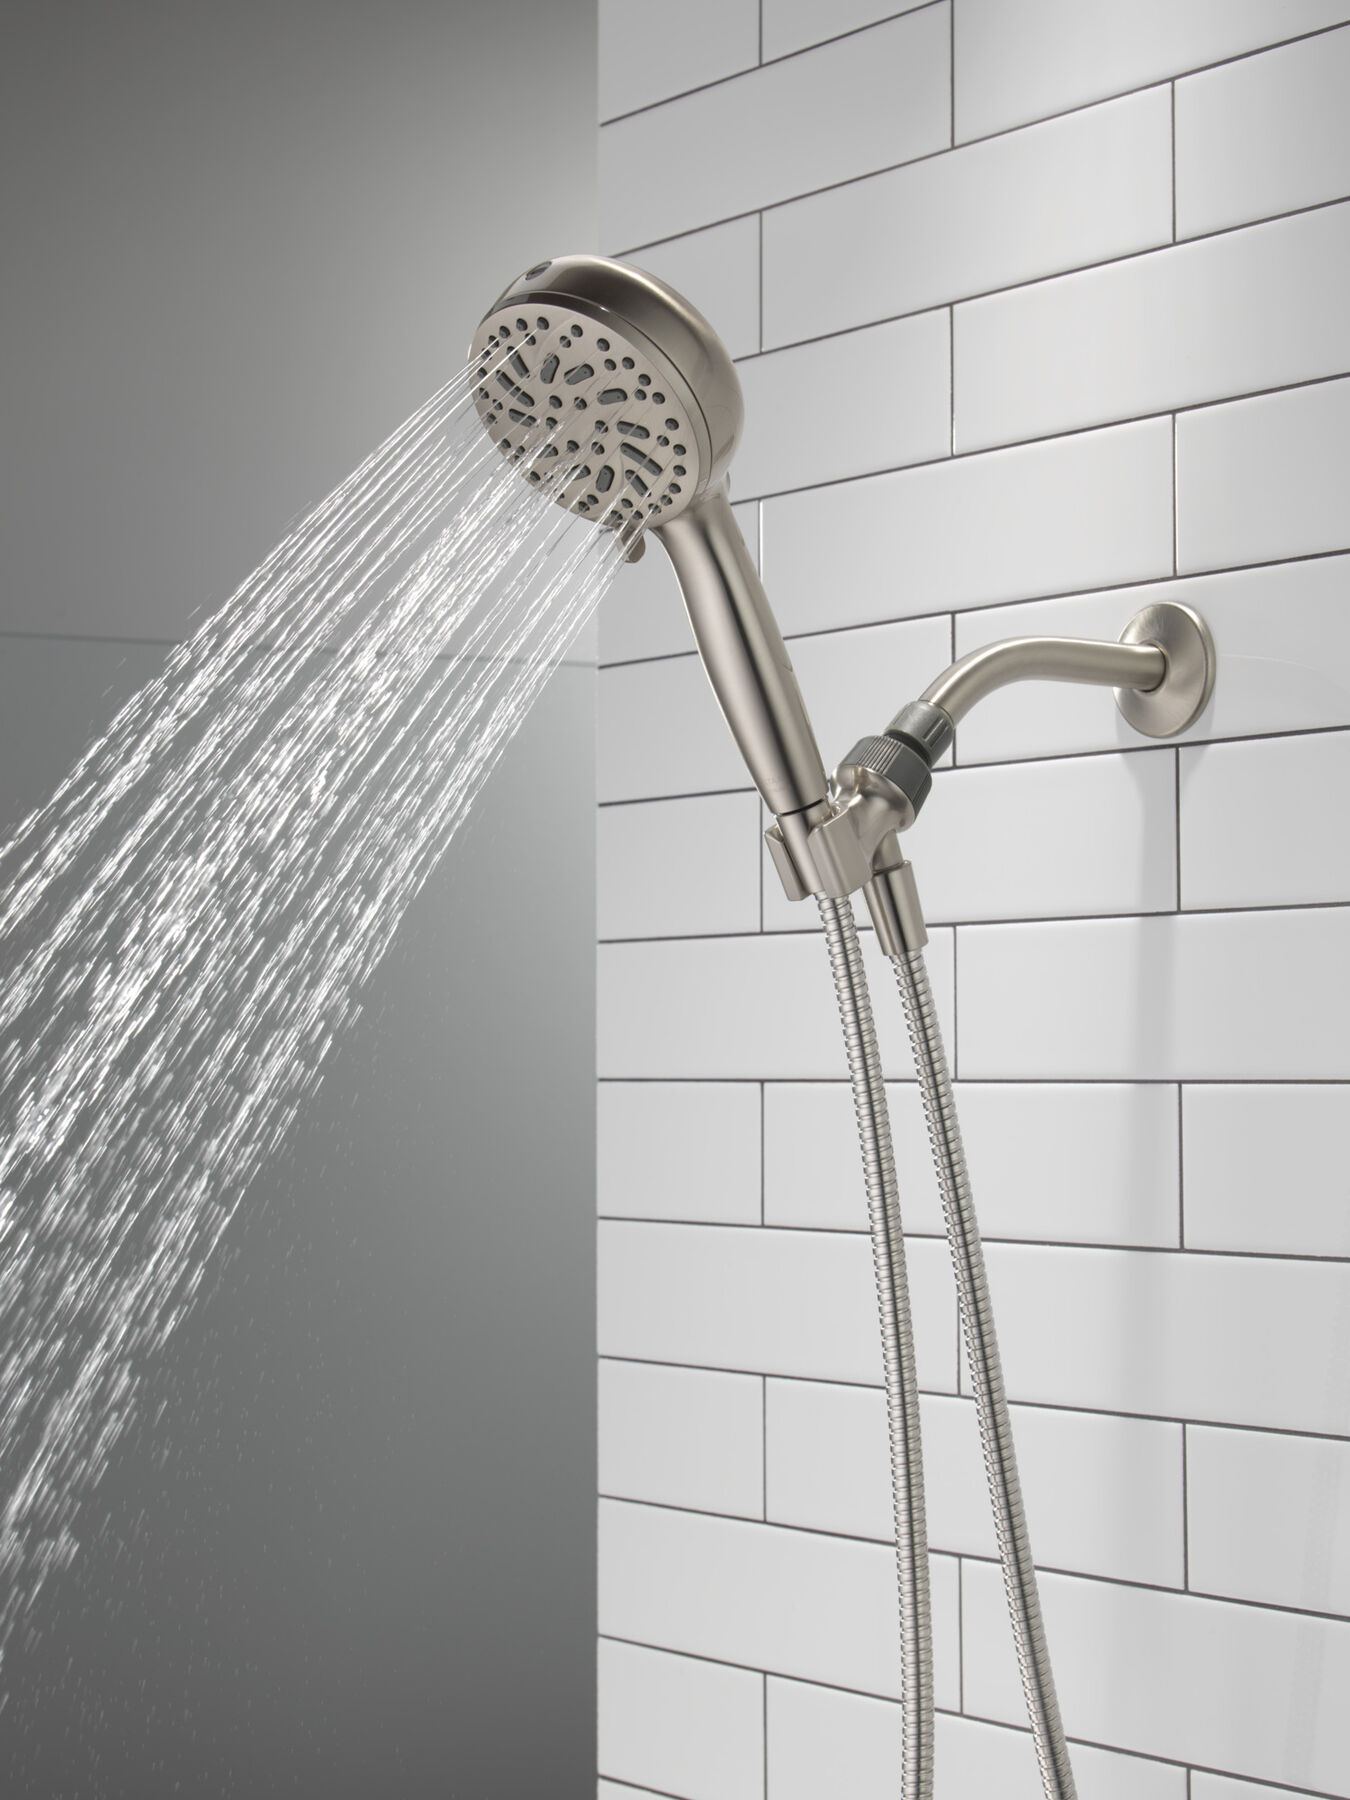 Shower systems: All-round enjoyment